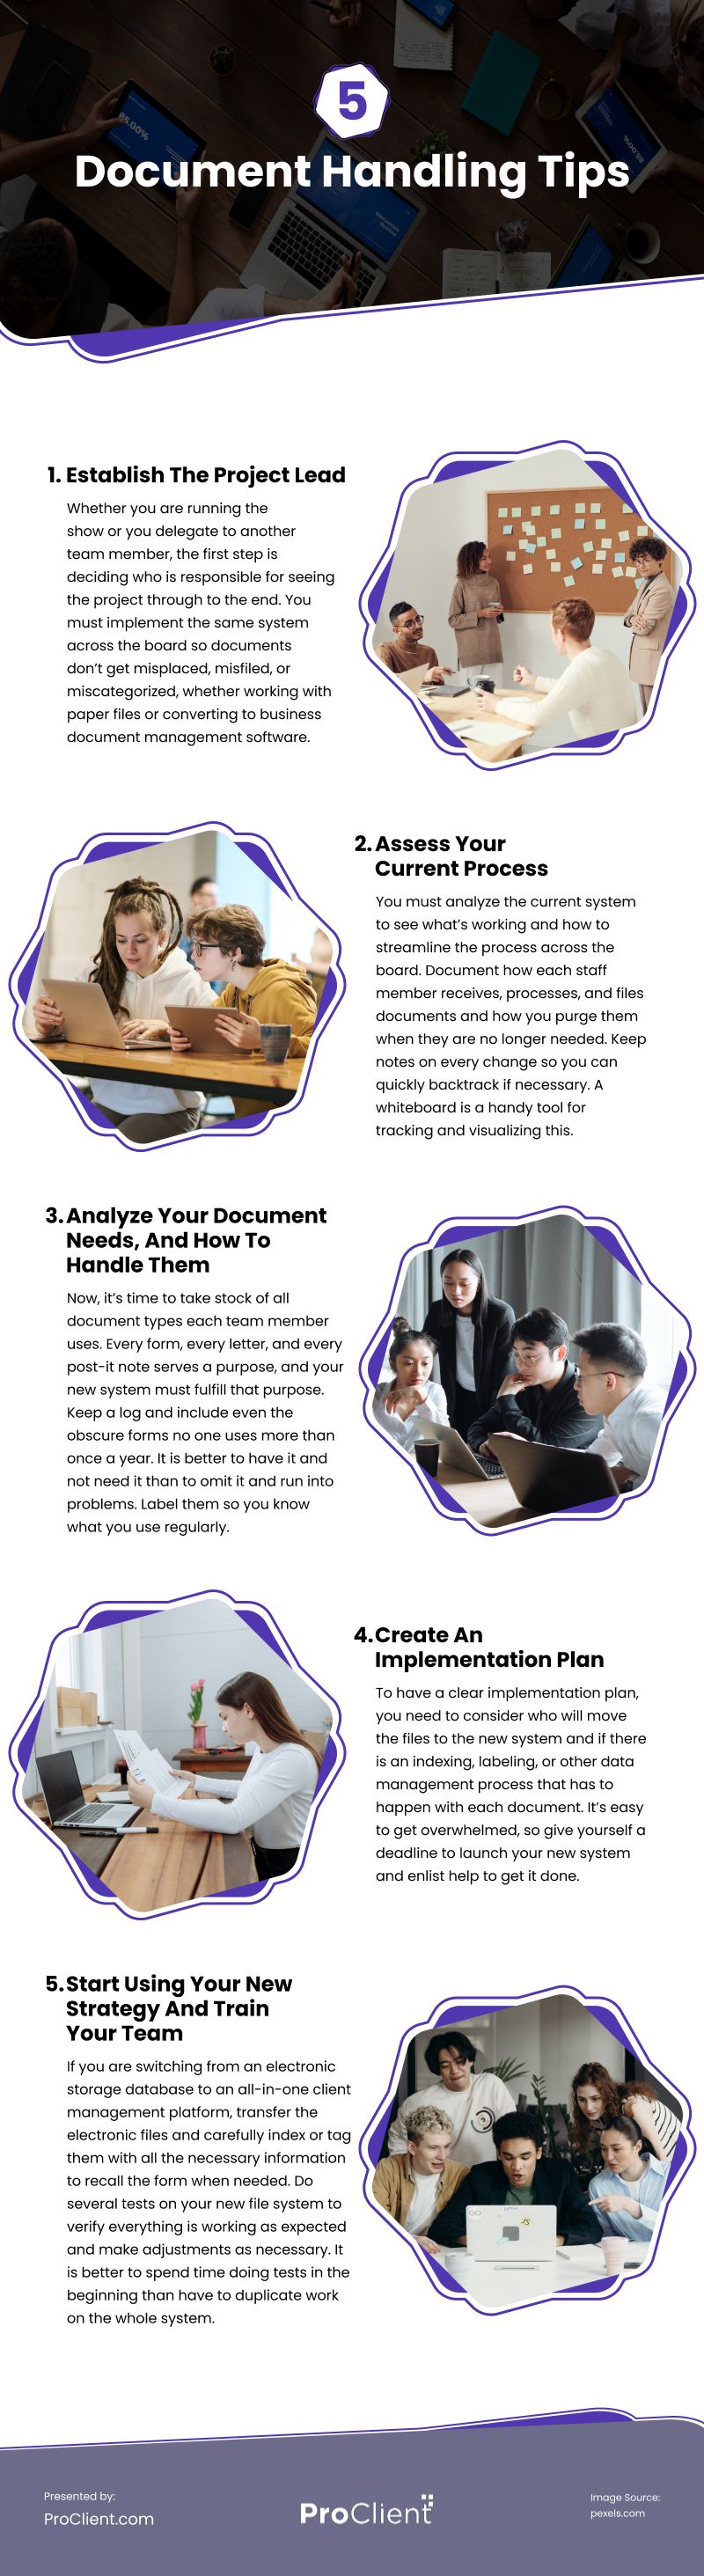 5 Document Handling Tips Infographic